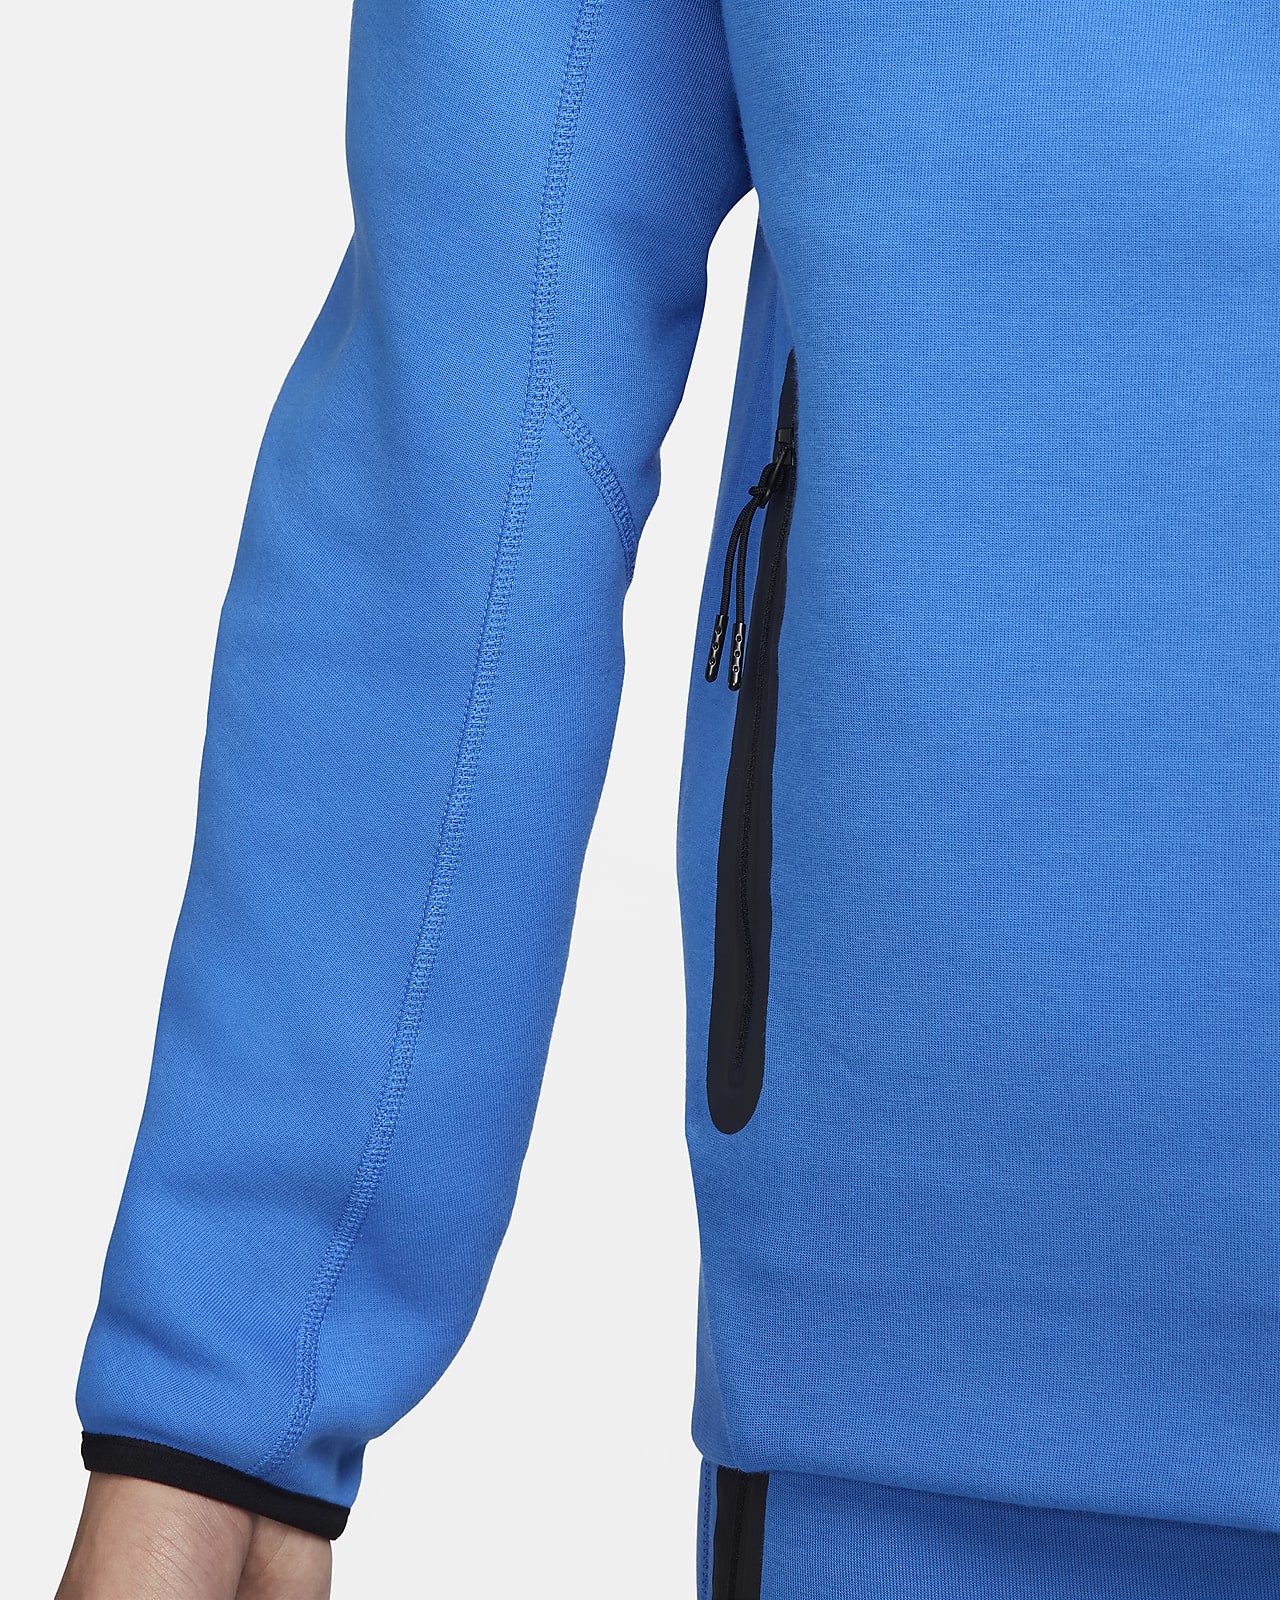 Sudadera con gorro de cierre completo para mujer Nike Sportswear Tech  Fleece Windrunner.